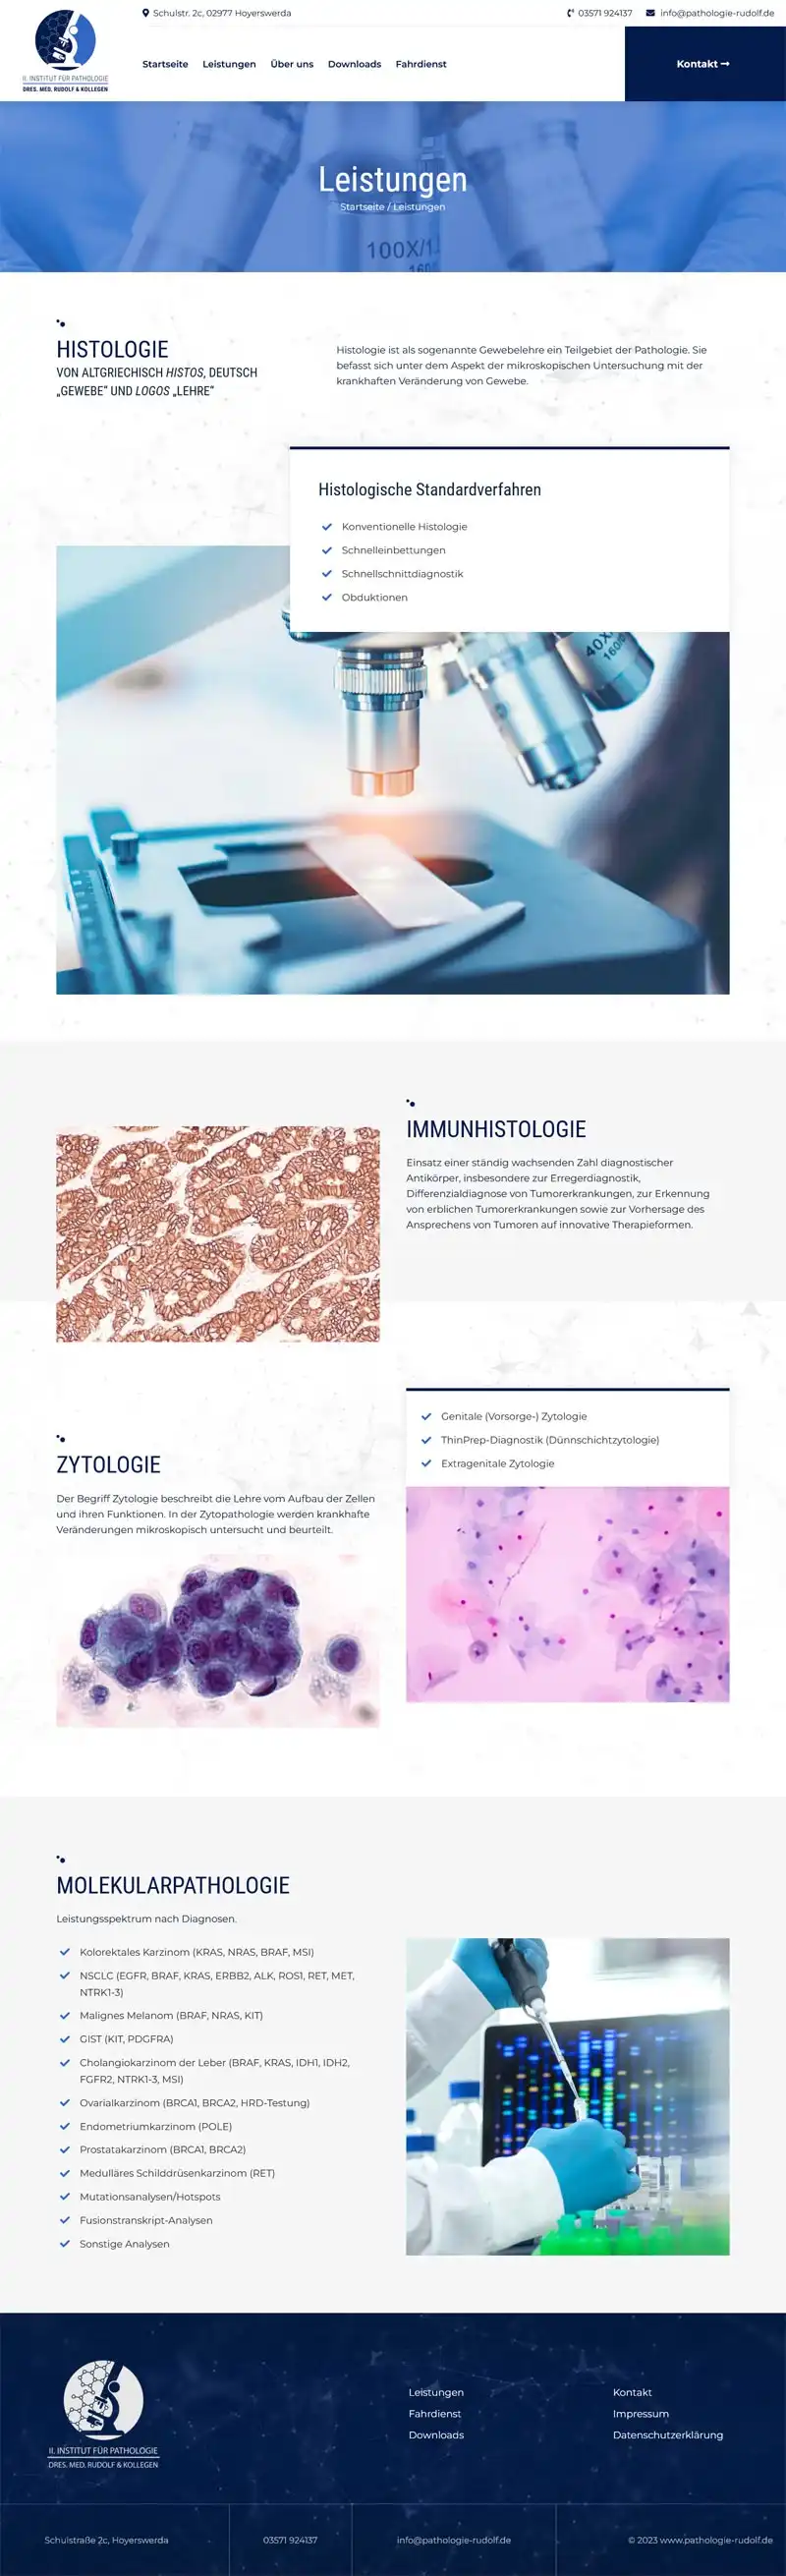 Pathologie Rudolf - Screenshot Fullsize Unterseite